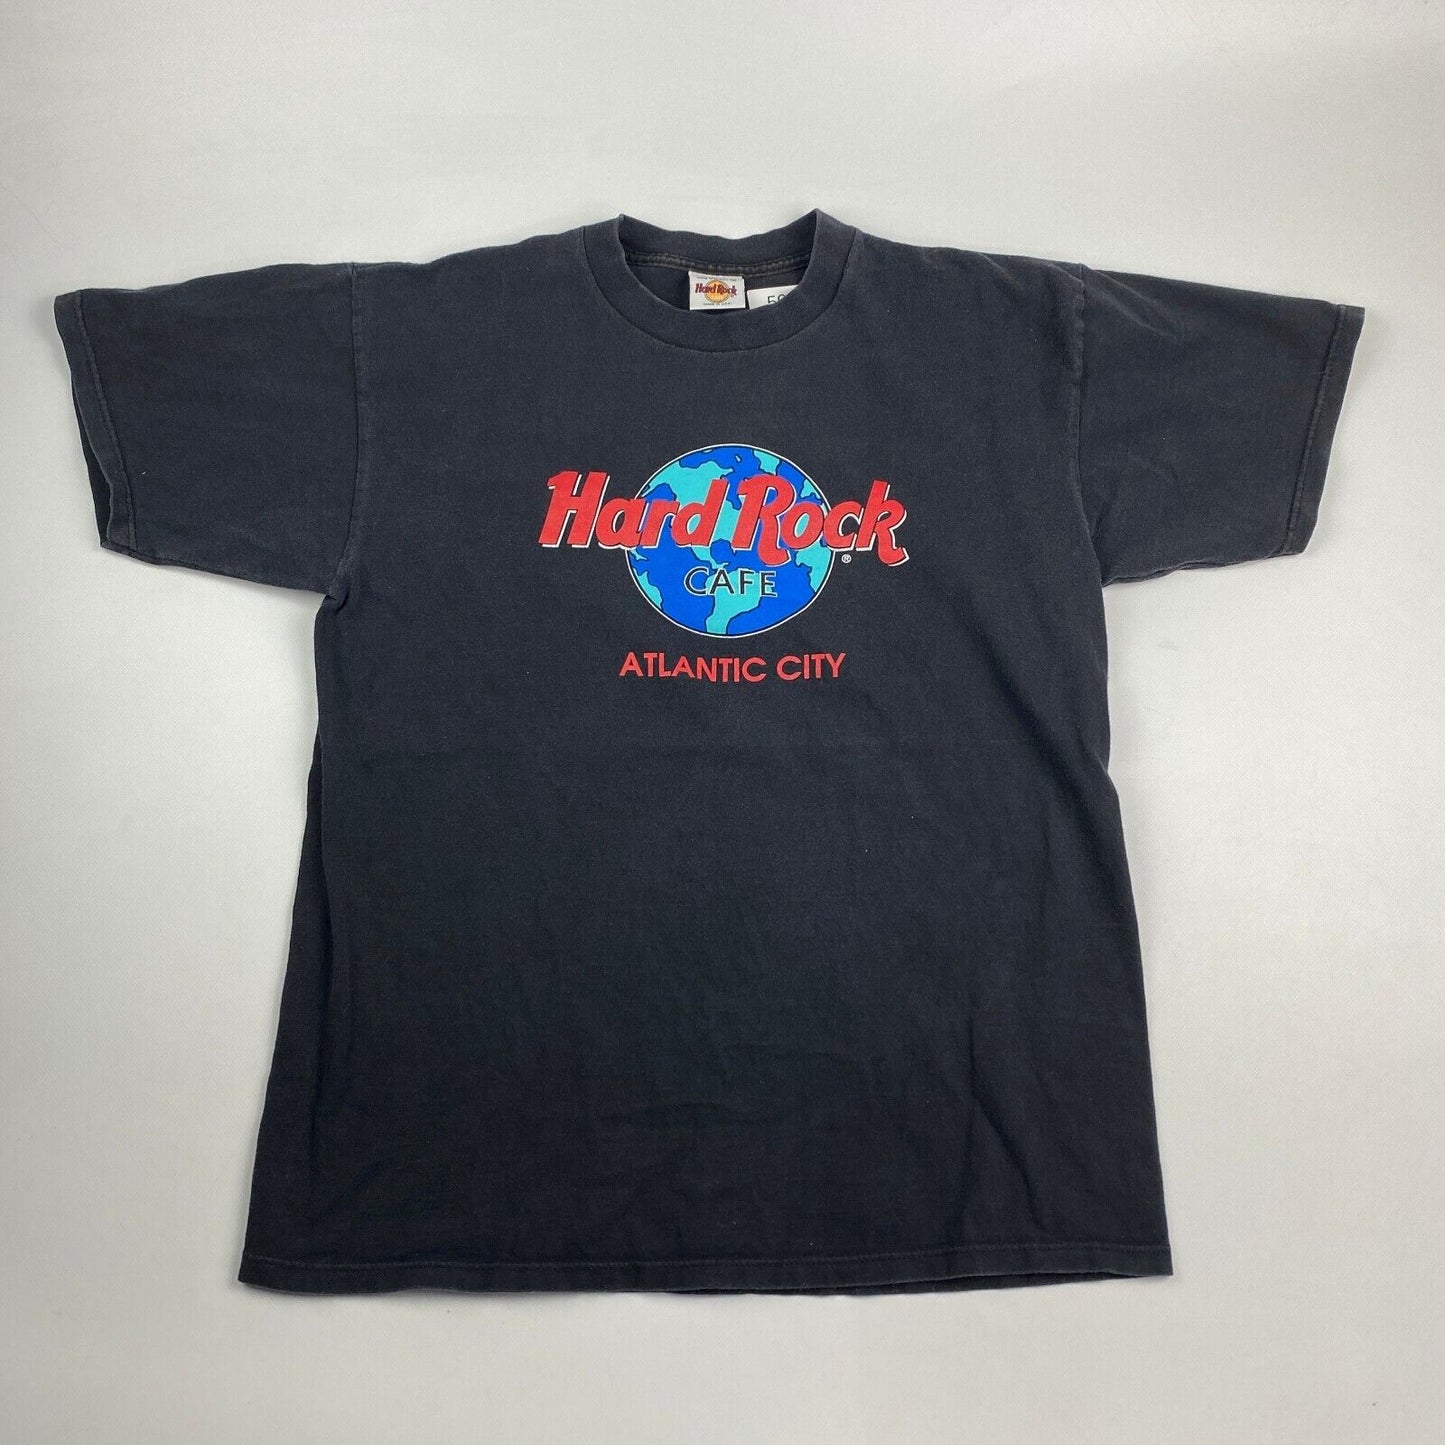 VINTAGE 90s Hard Rock Cafe Atlantic City Black T-Shirt sz Large Men